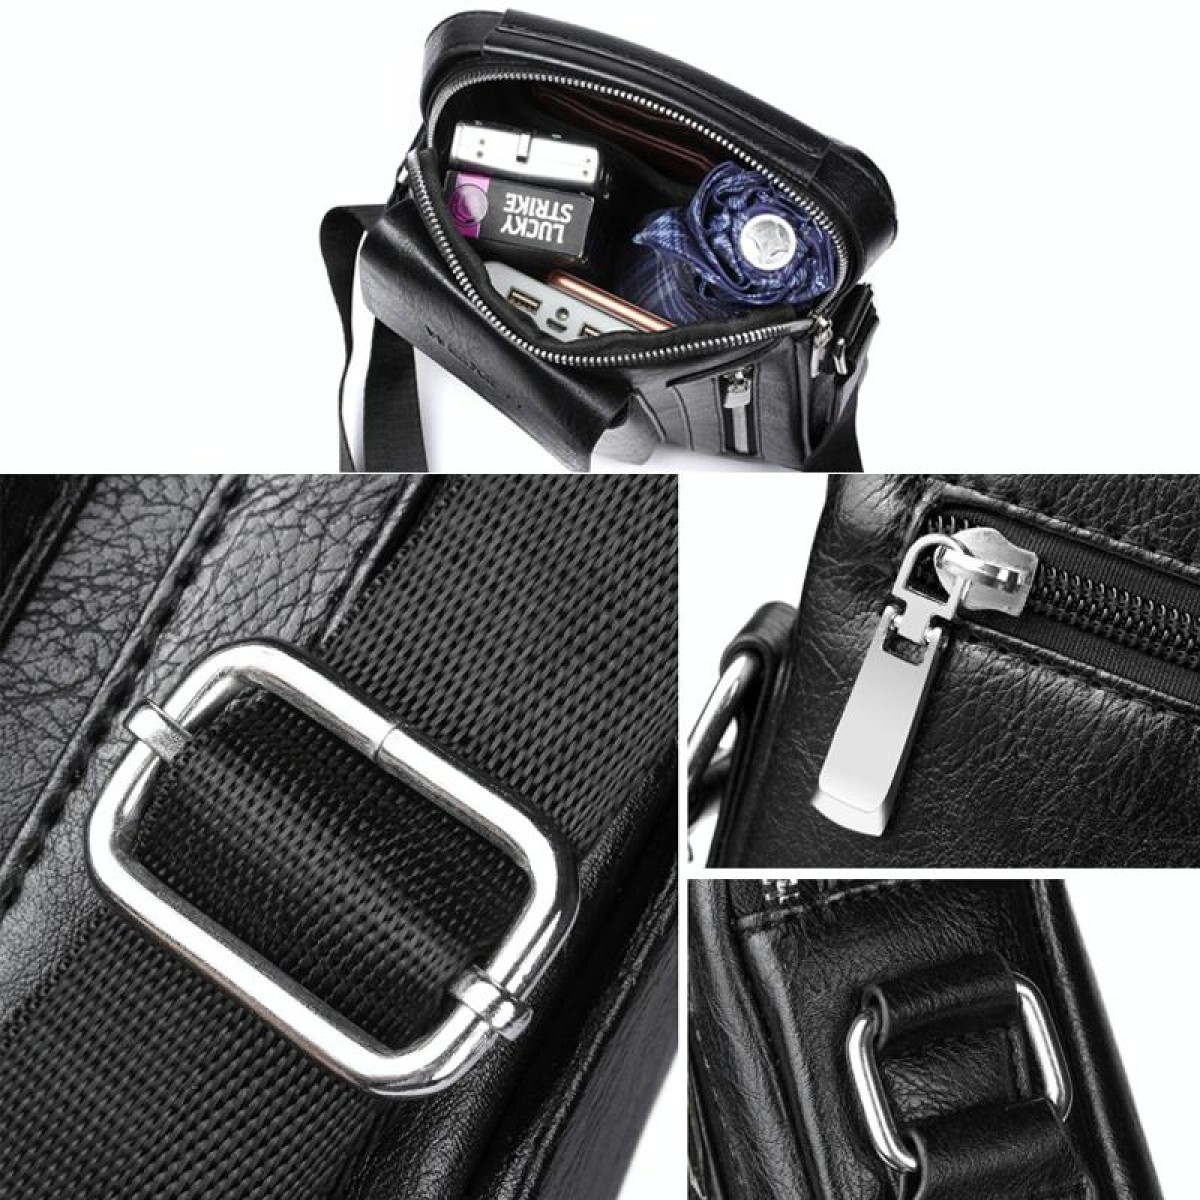 Universal Fashion Casual Men Shoulder Messenger Bag Handbag, Size: L (24cm x 20cm x 6cm)(Black)